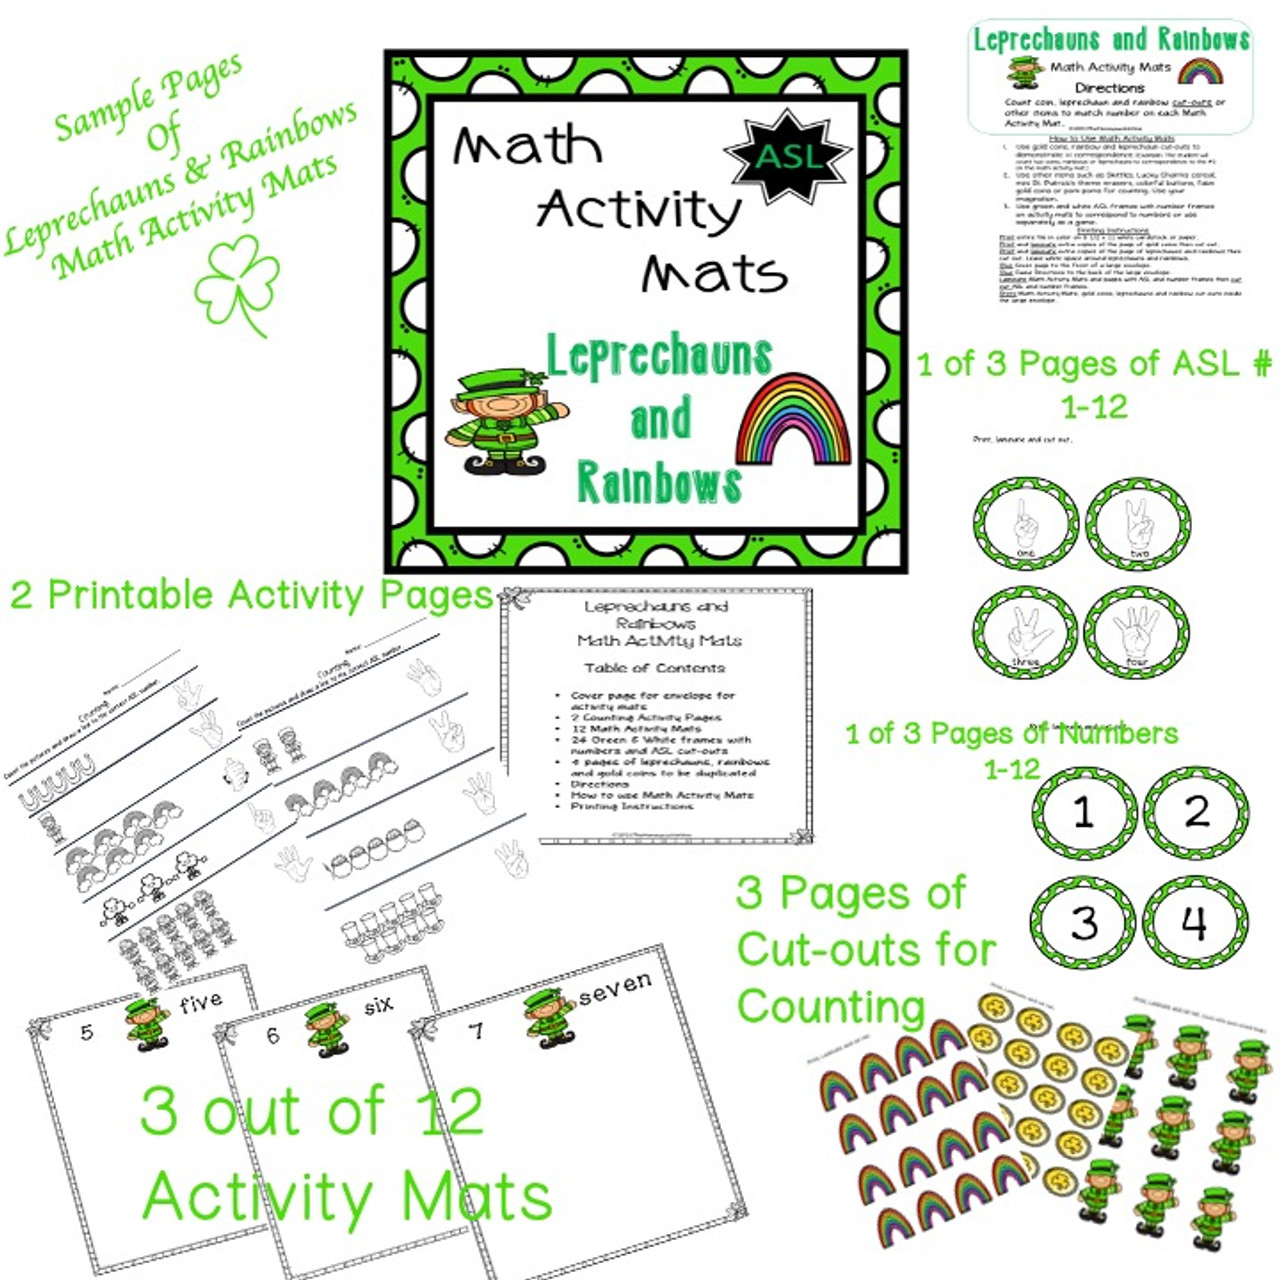 Special Education ASL Leprechauns and Rainbows Math Activity Mats